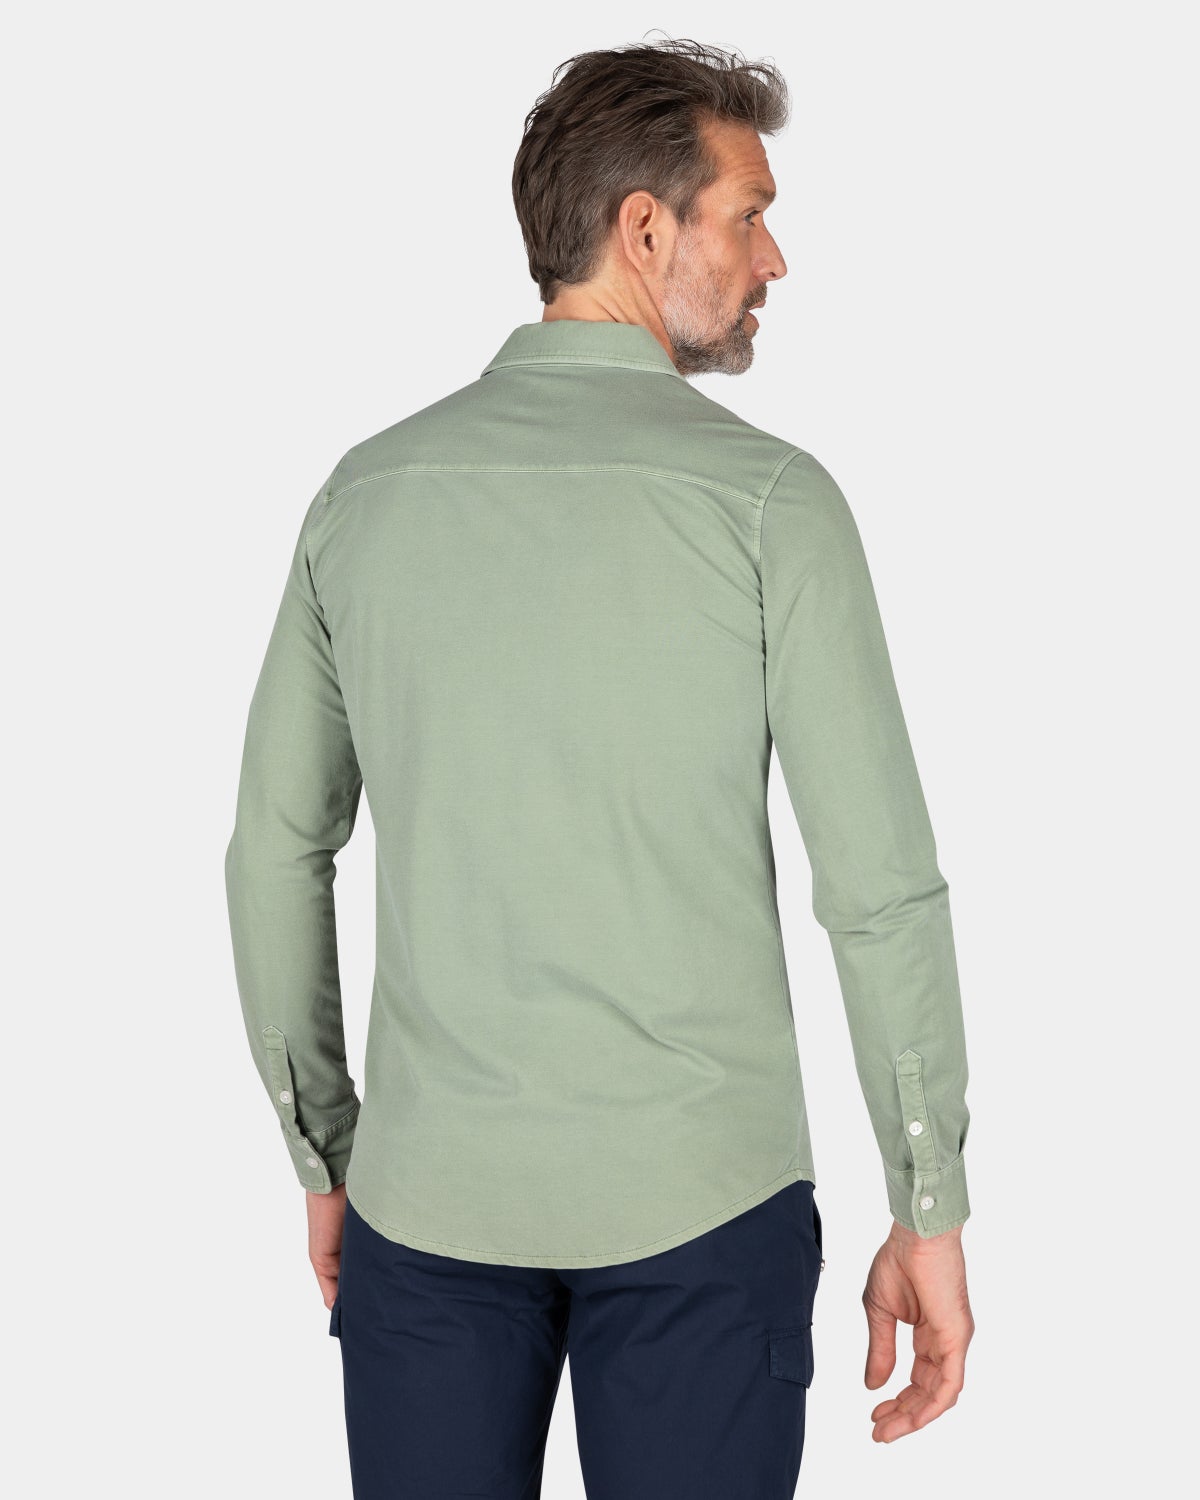 Green cotton shirt - Mellow Army